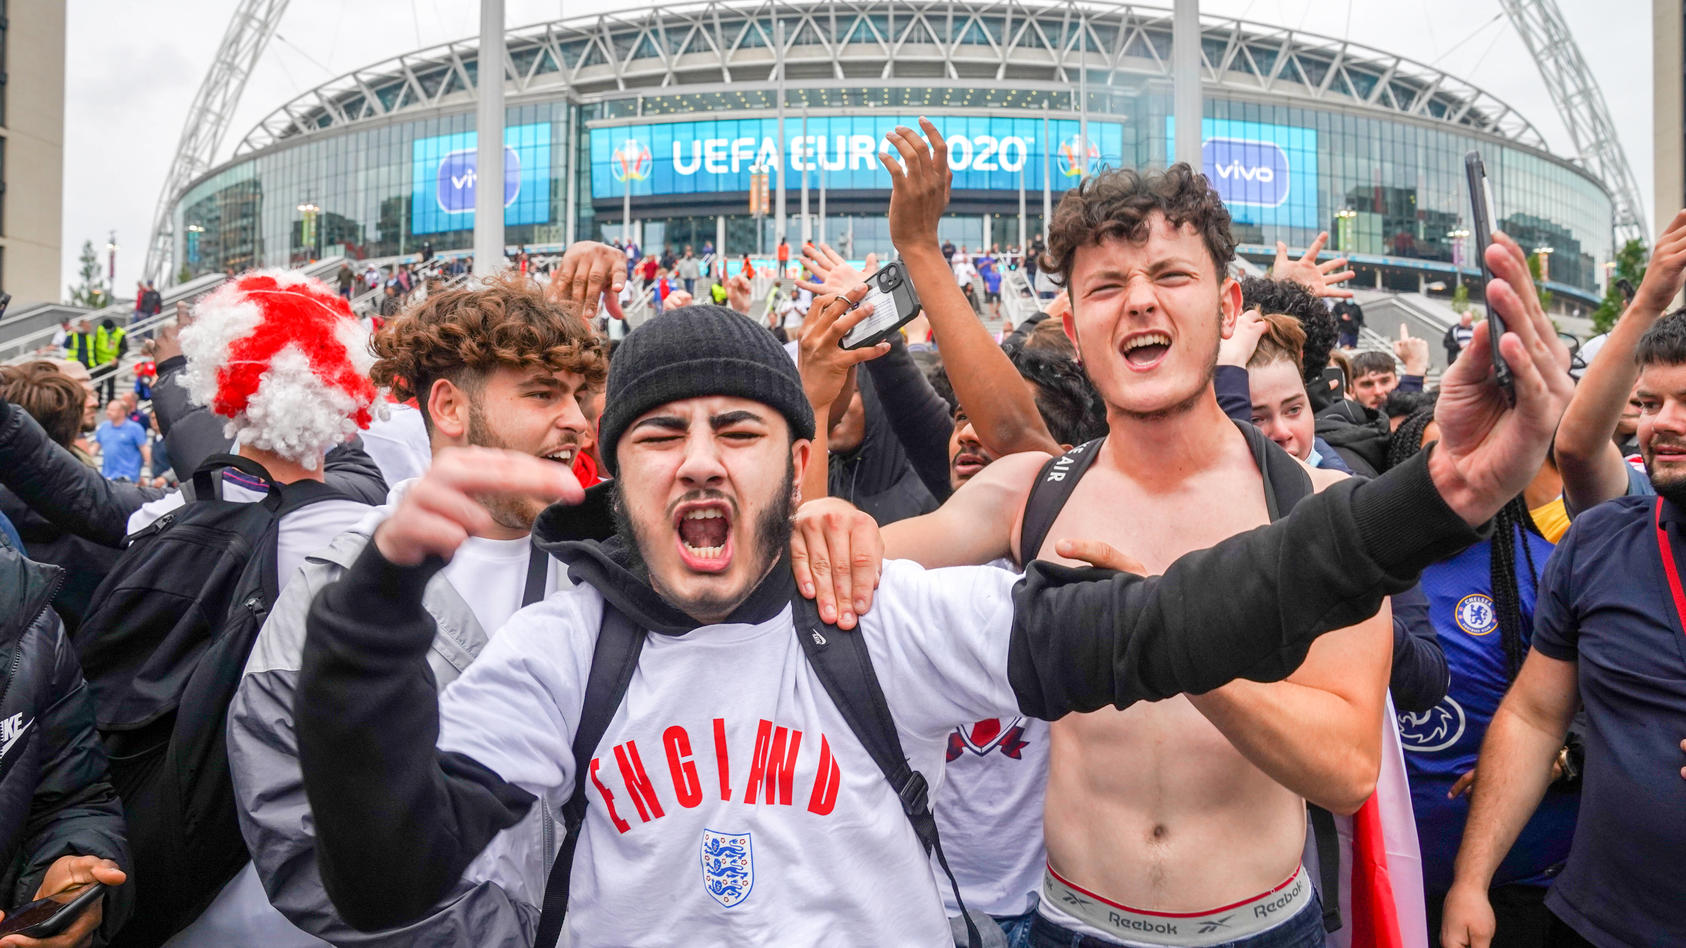 England Fans Fans of England prior to the Euro 2020 last 16 tie at Wembley Stadium, London PUBLICATIONxNOTxINxUKxCHN Copyright: xStuartxGarneysx FIL-15630-0058 